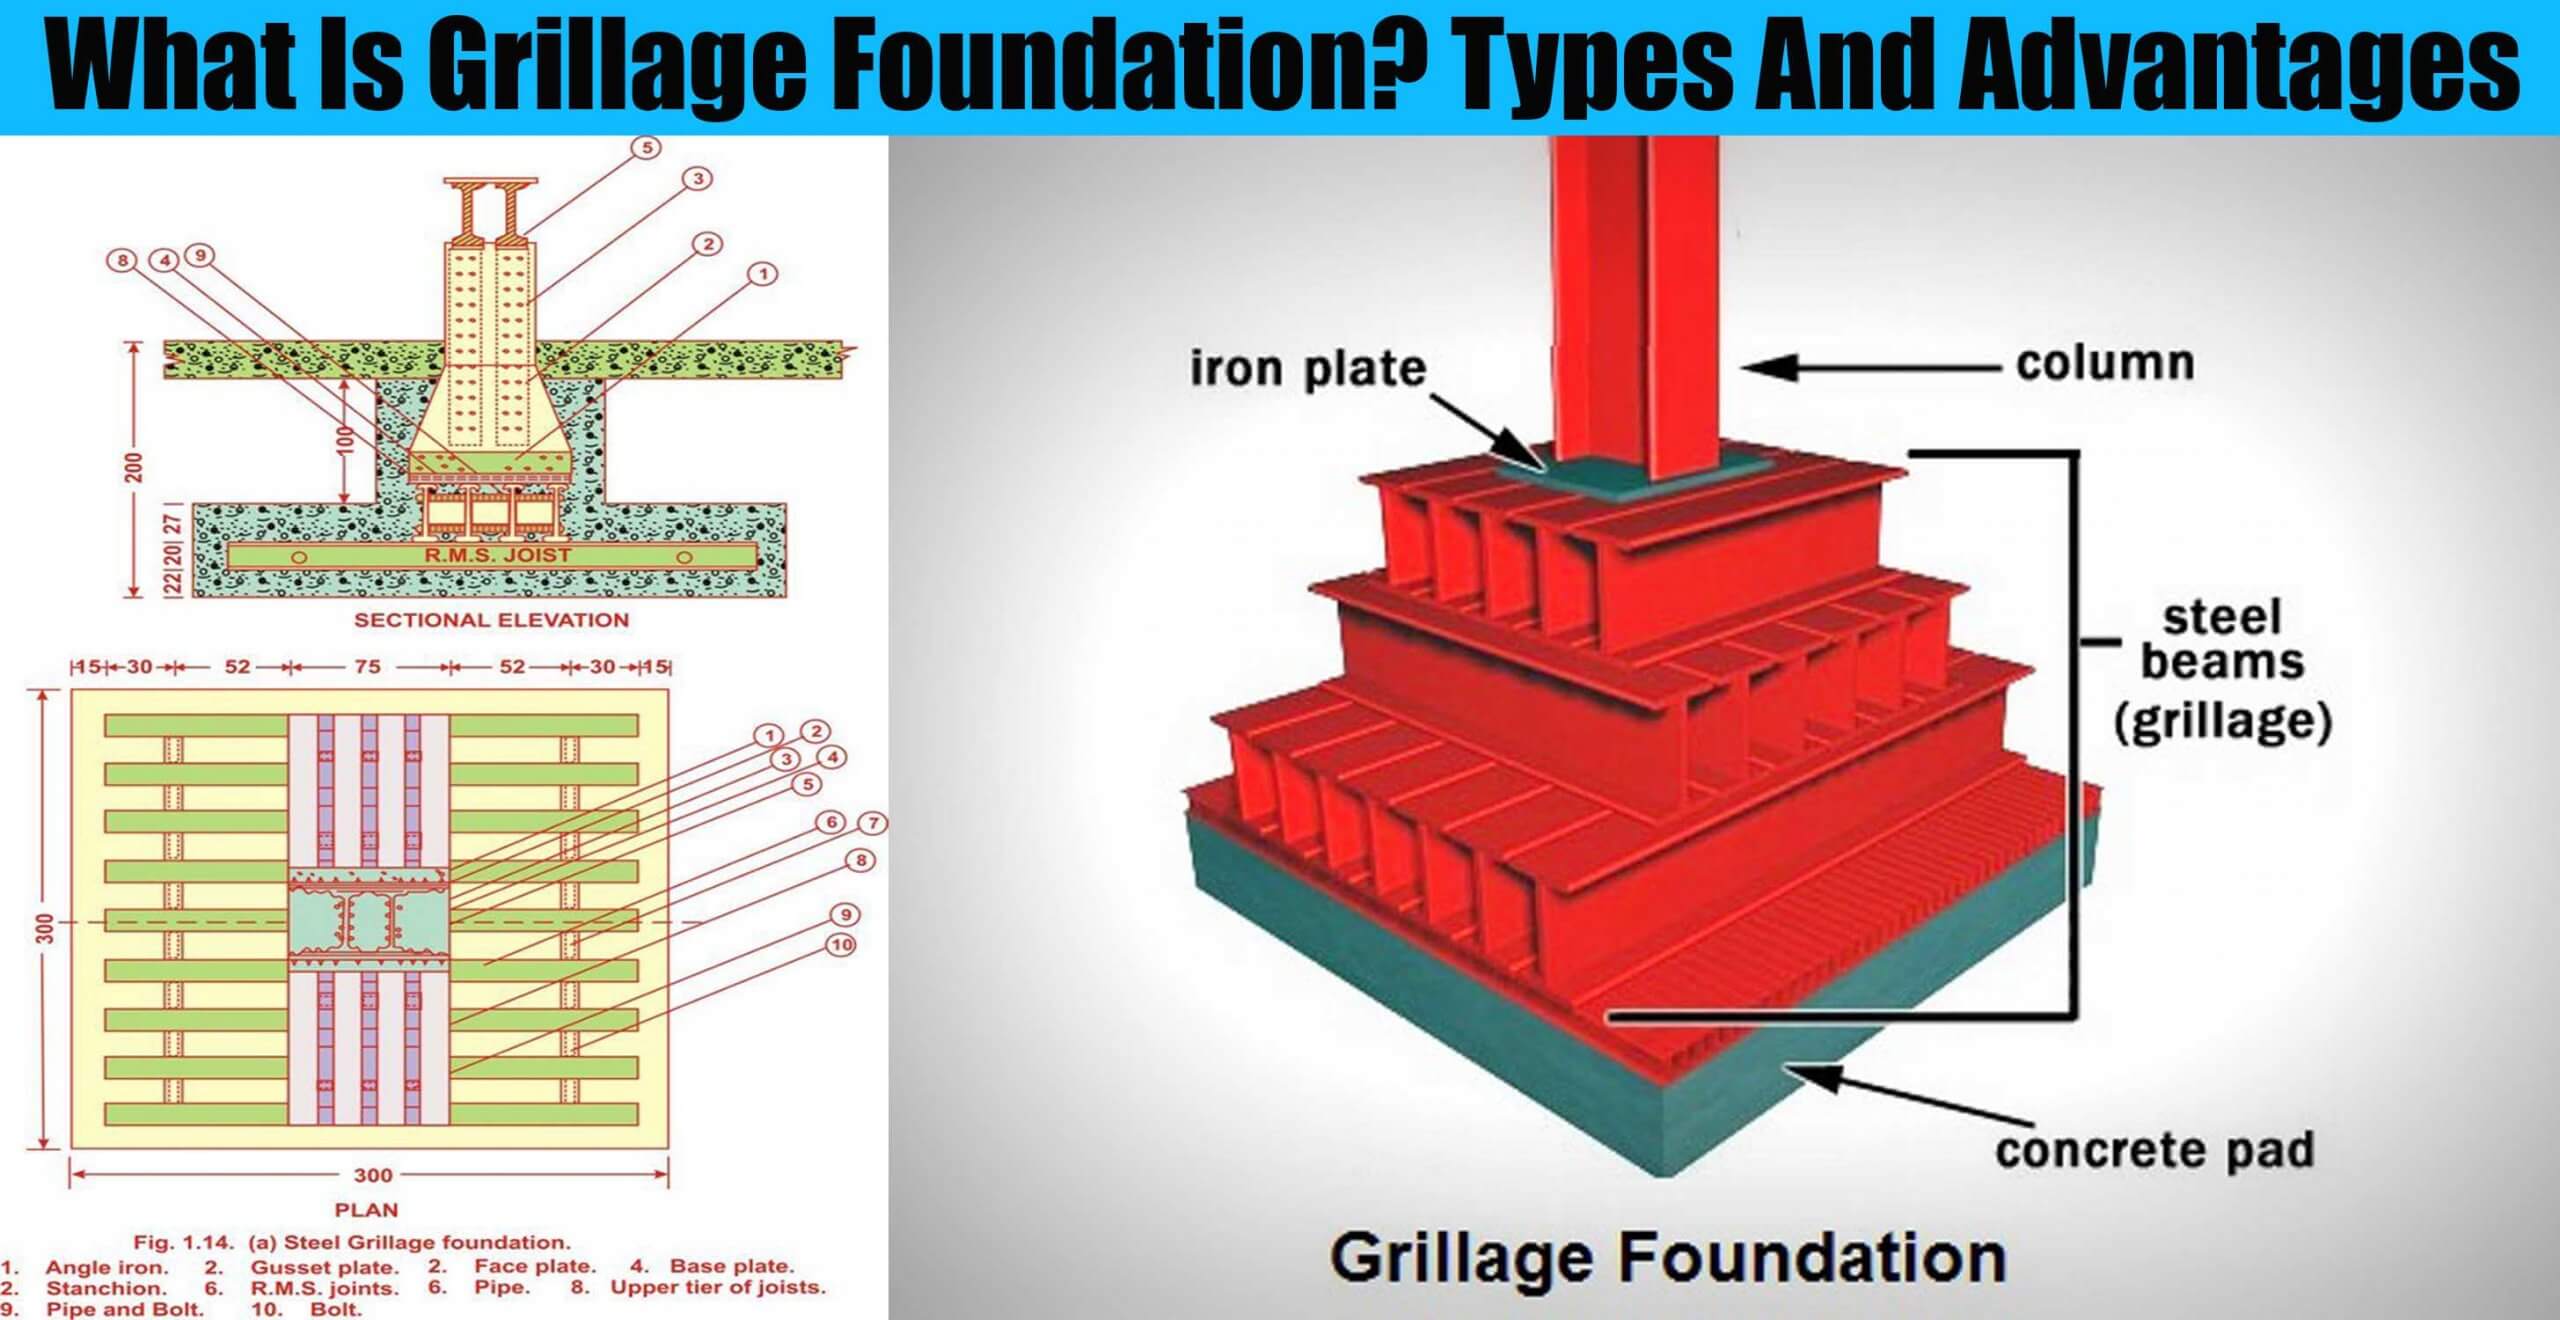 Concrete type. Grillage Foundation. Pile-grillage Foundation. Type of Concrete Foundation. Types of Foundations.